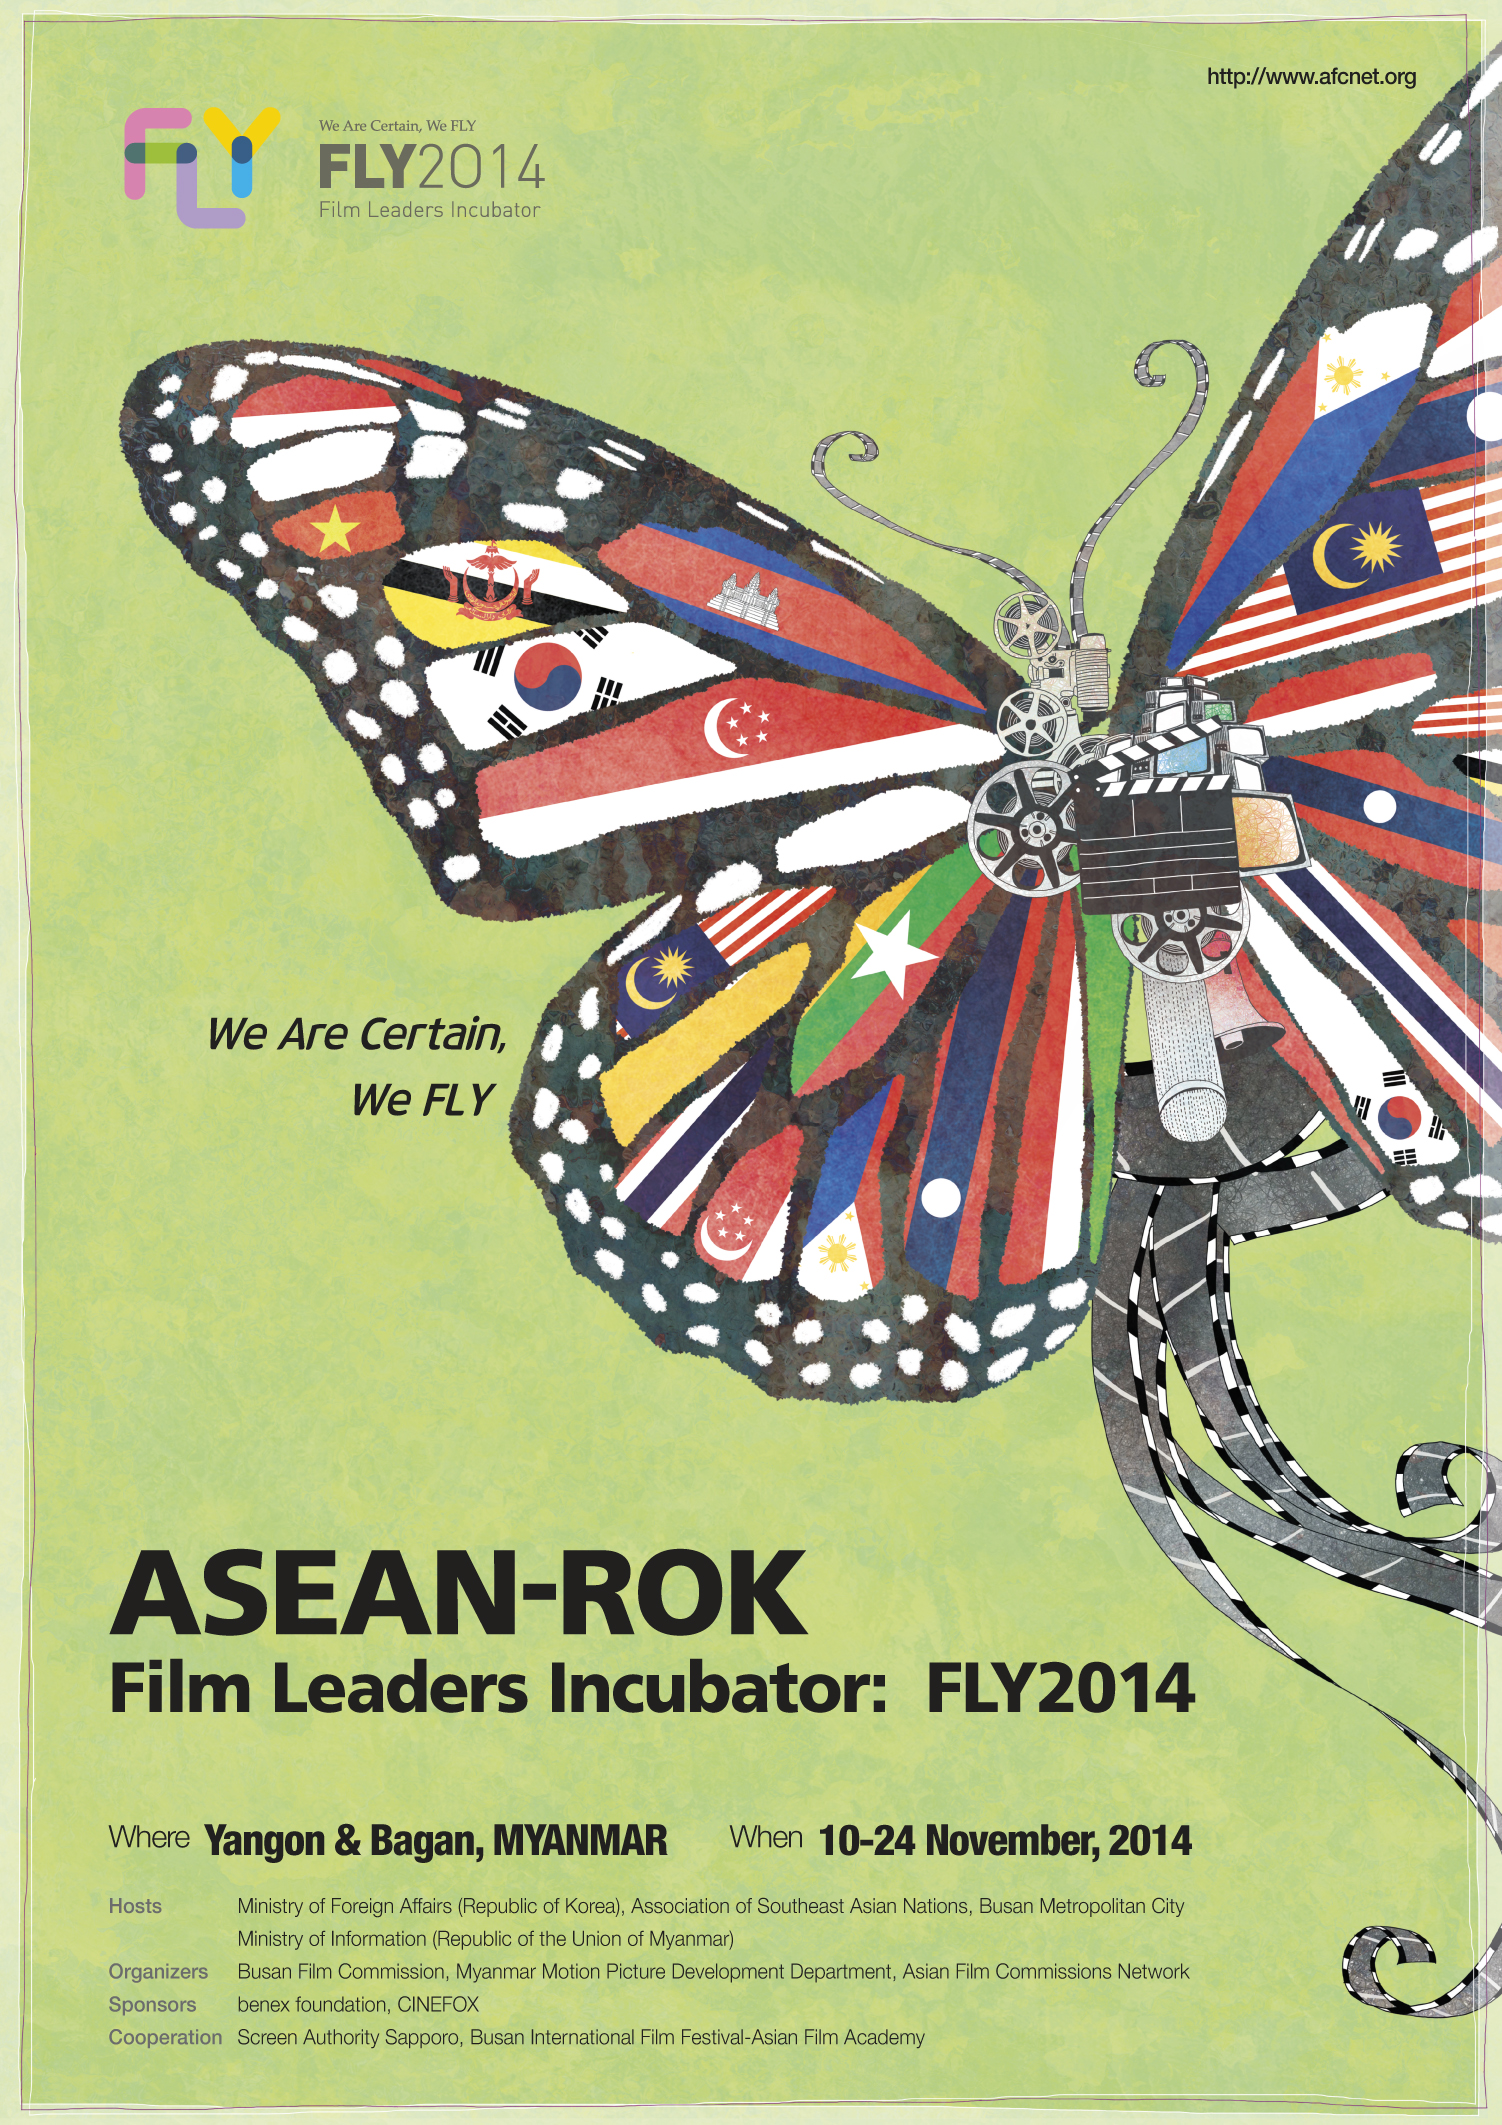 ASEAN-ROK filmmaking workshop seeking candidates, including those from Vietnam